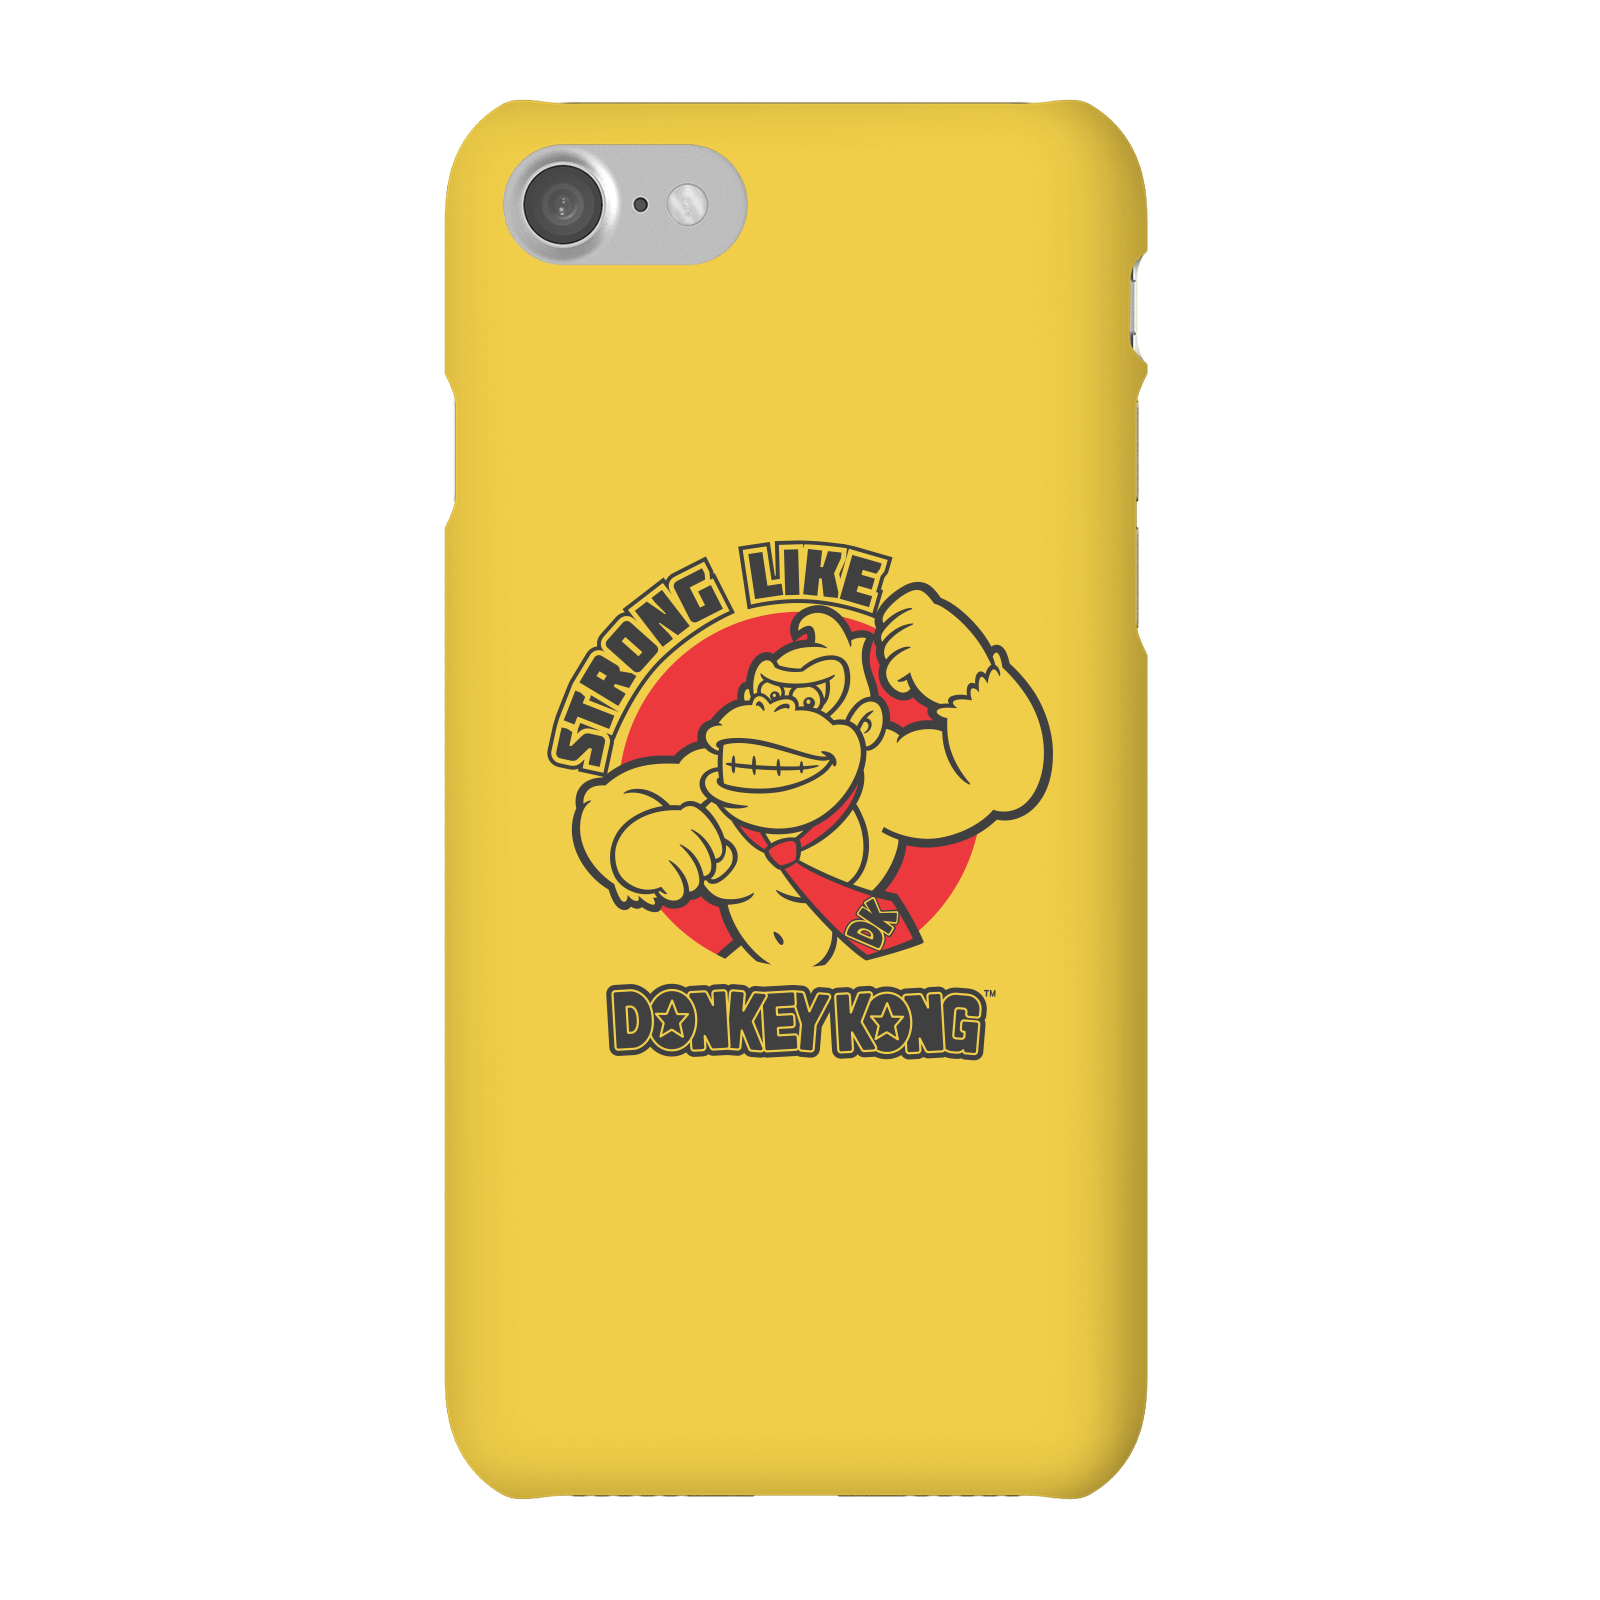 Nintendo Donkey Kong Strong Like Donkey Kong Phone Case - iPhone 7 - Snap Case - Gloss